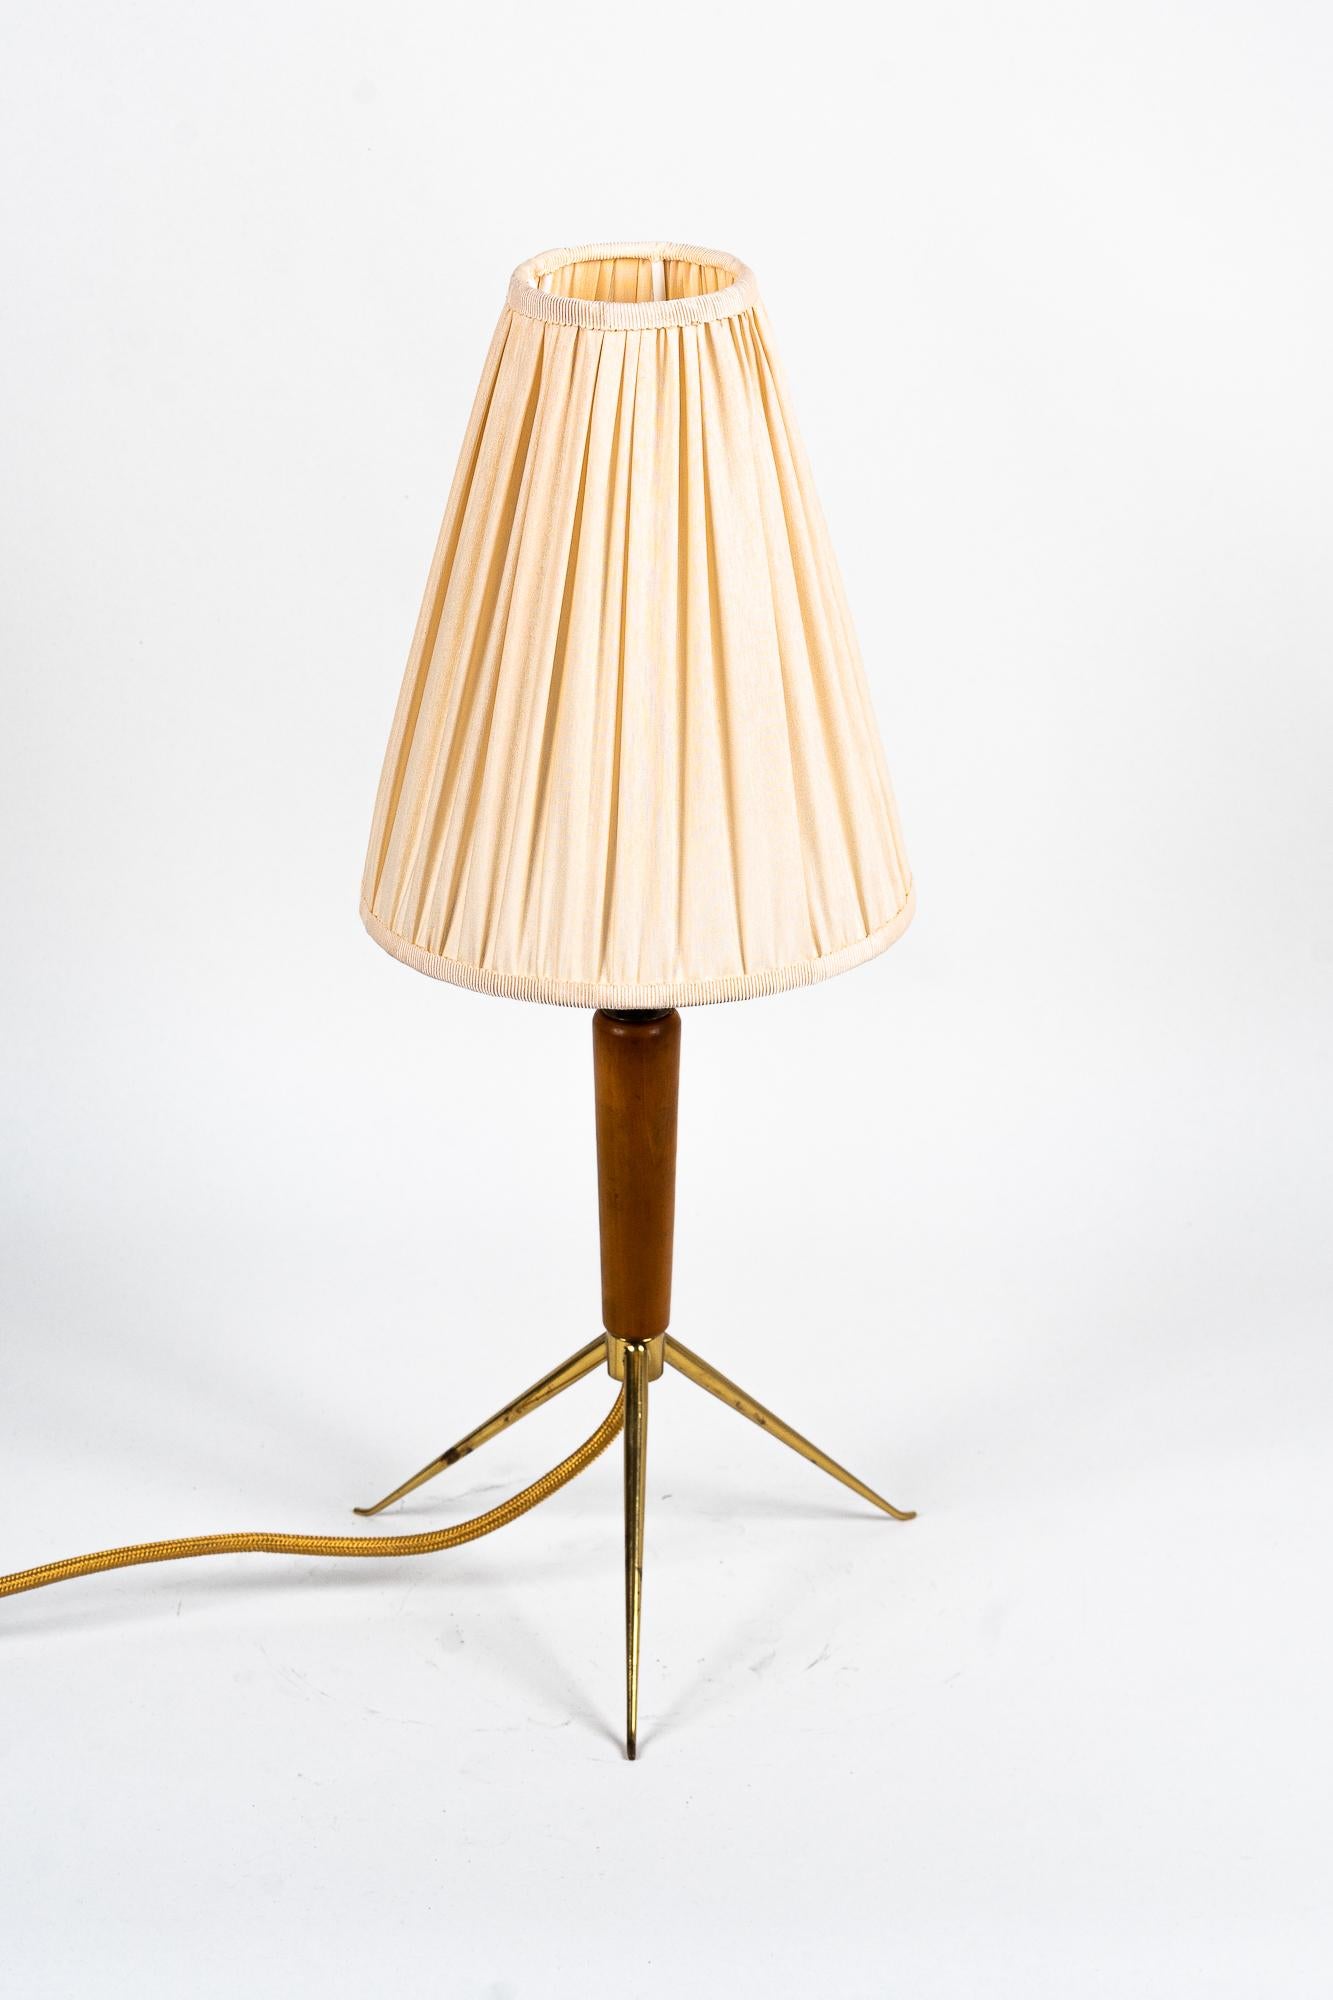 Austrian Rupert Nikoll Table Lamps, Vienna, circa 1950s